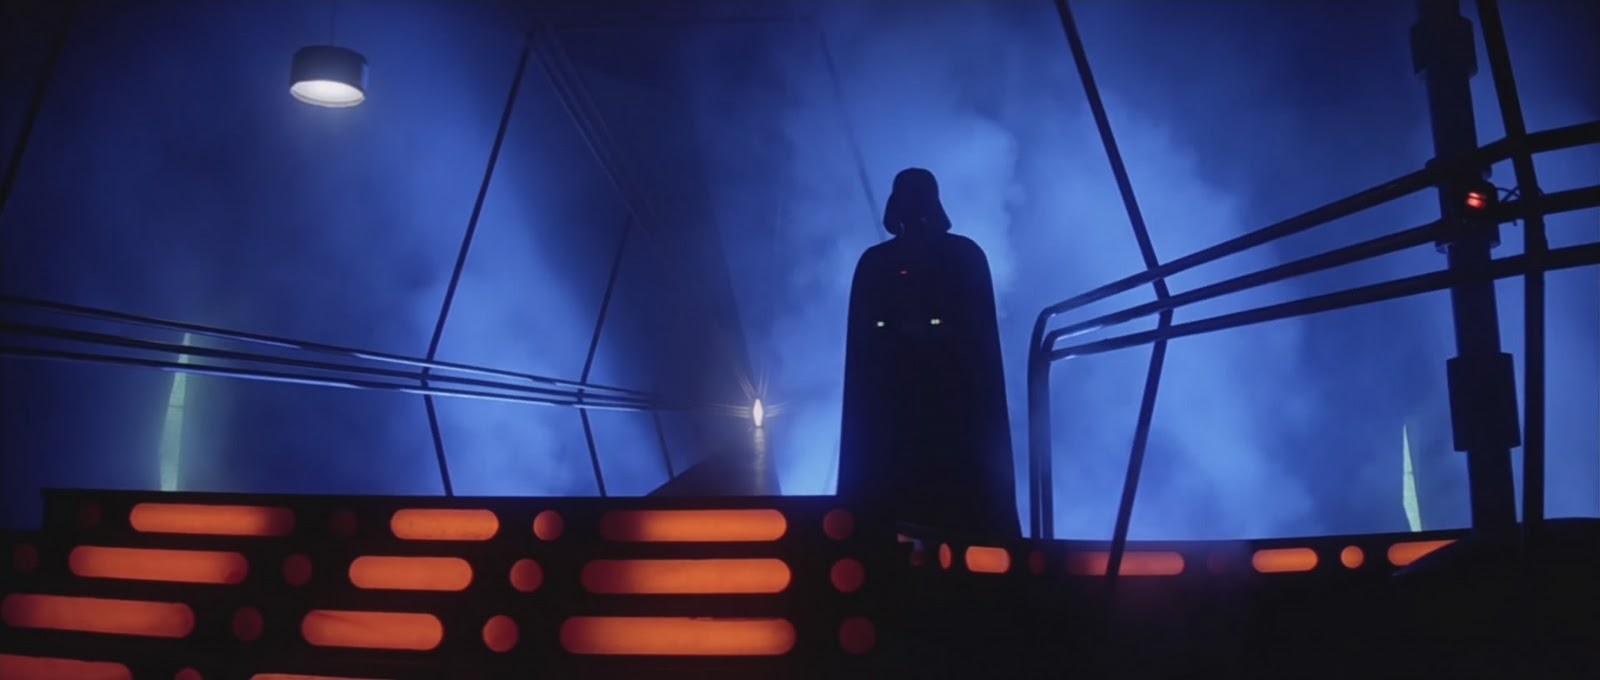 Star Wars Darth Vader Android Wallpaper Empire Strikes Back